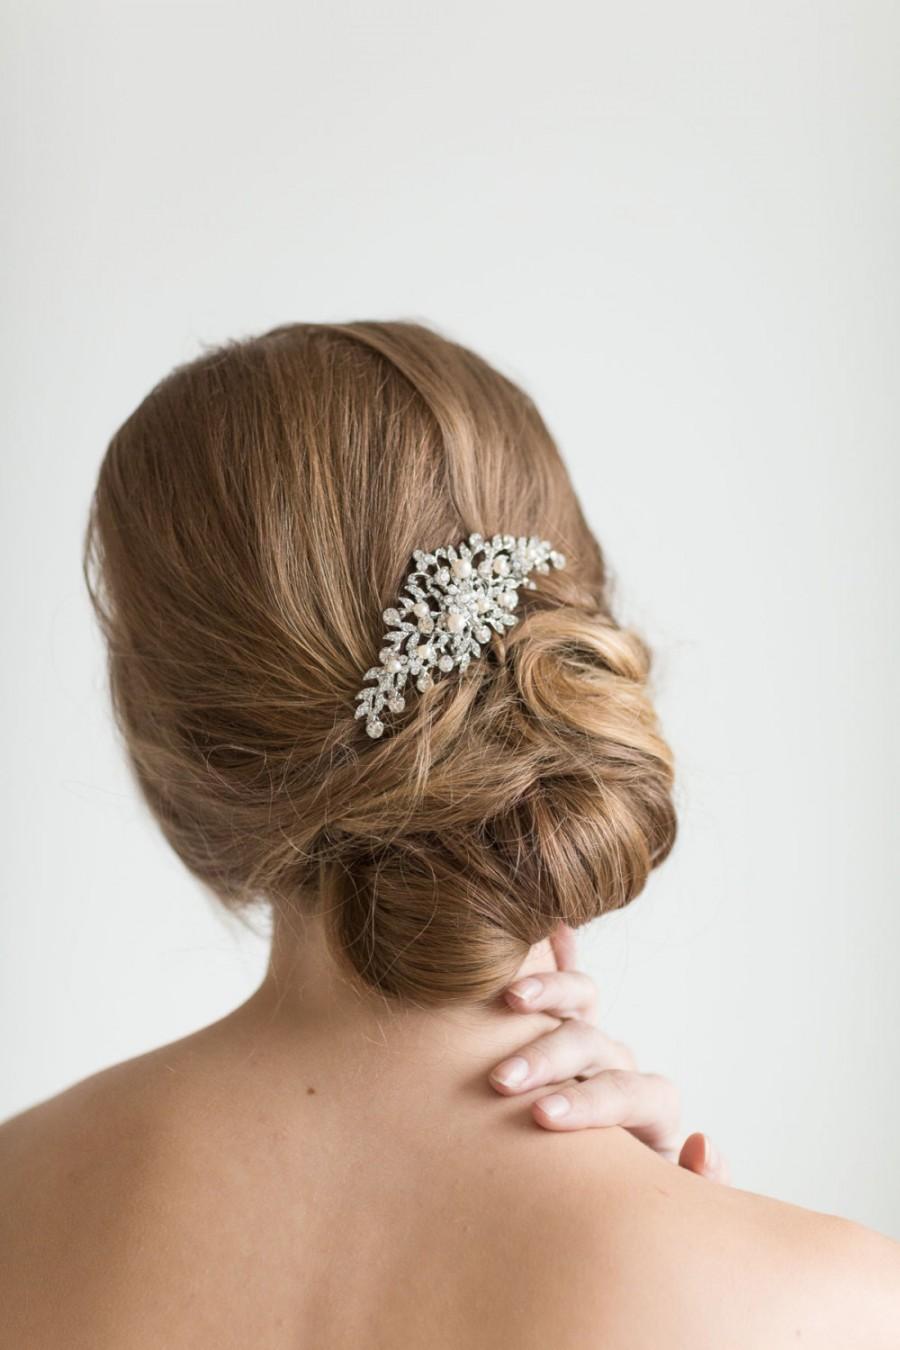 Wedding - Bridal Pearl Hair Comb, Wedding Hair Comb, Crystal & Pearl Hair Comb, Bridal Head Piece